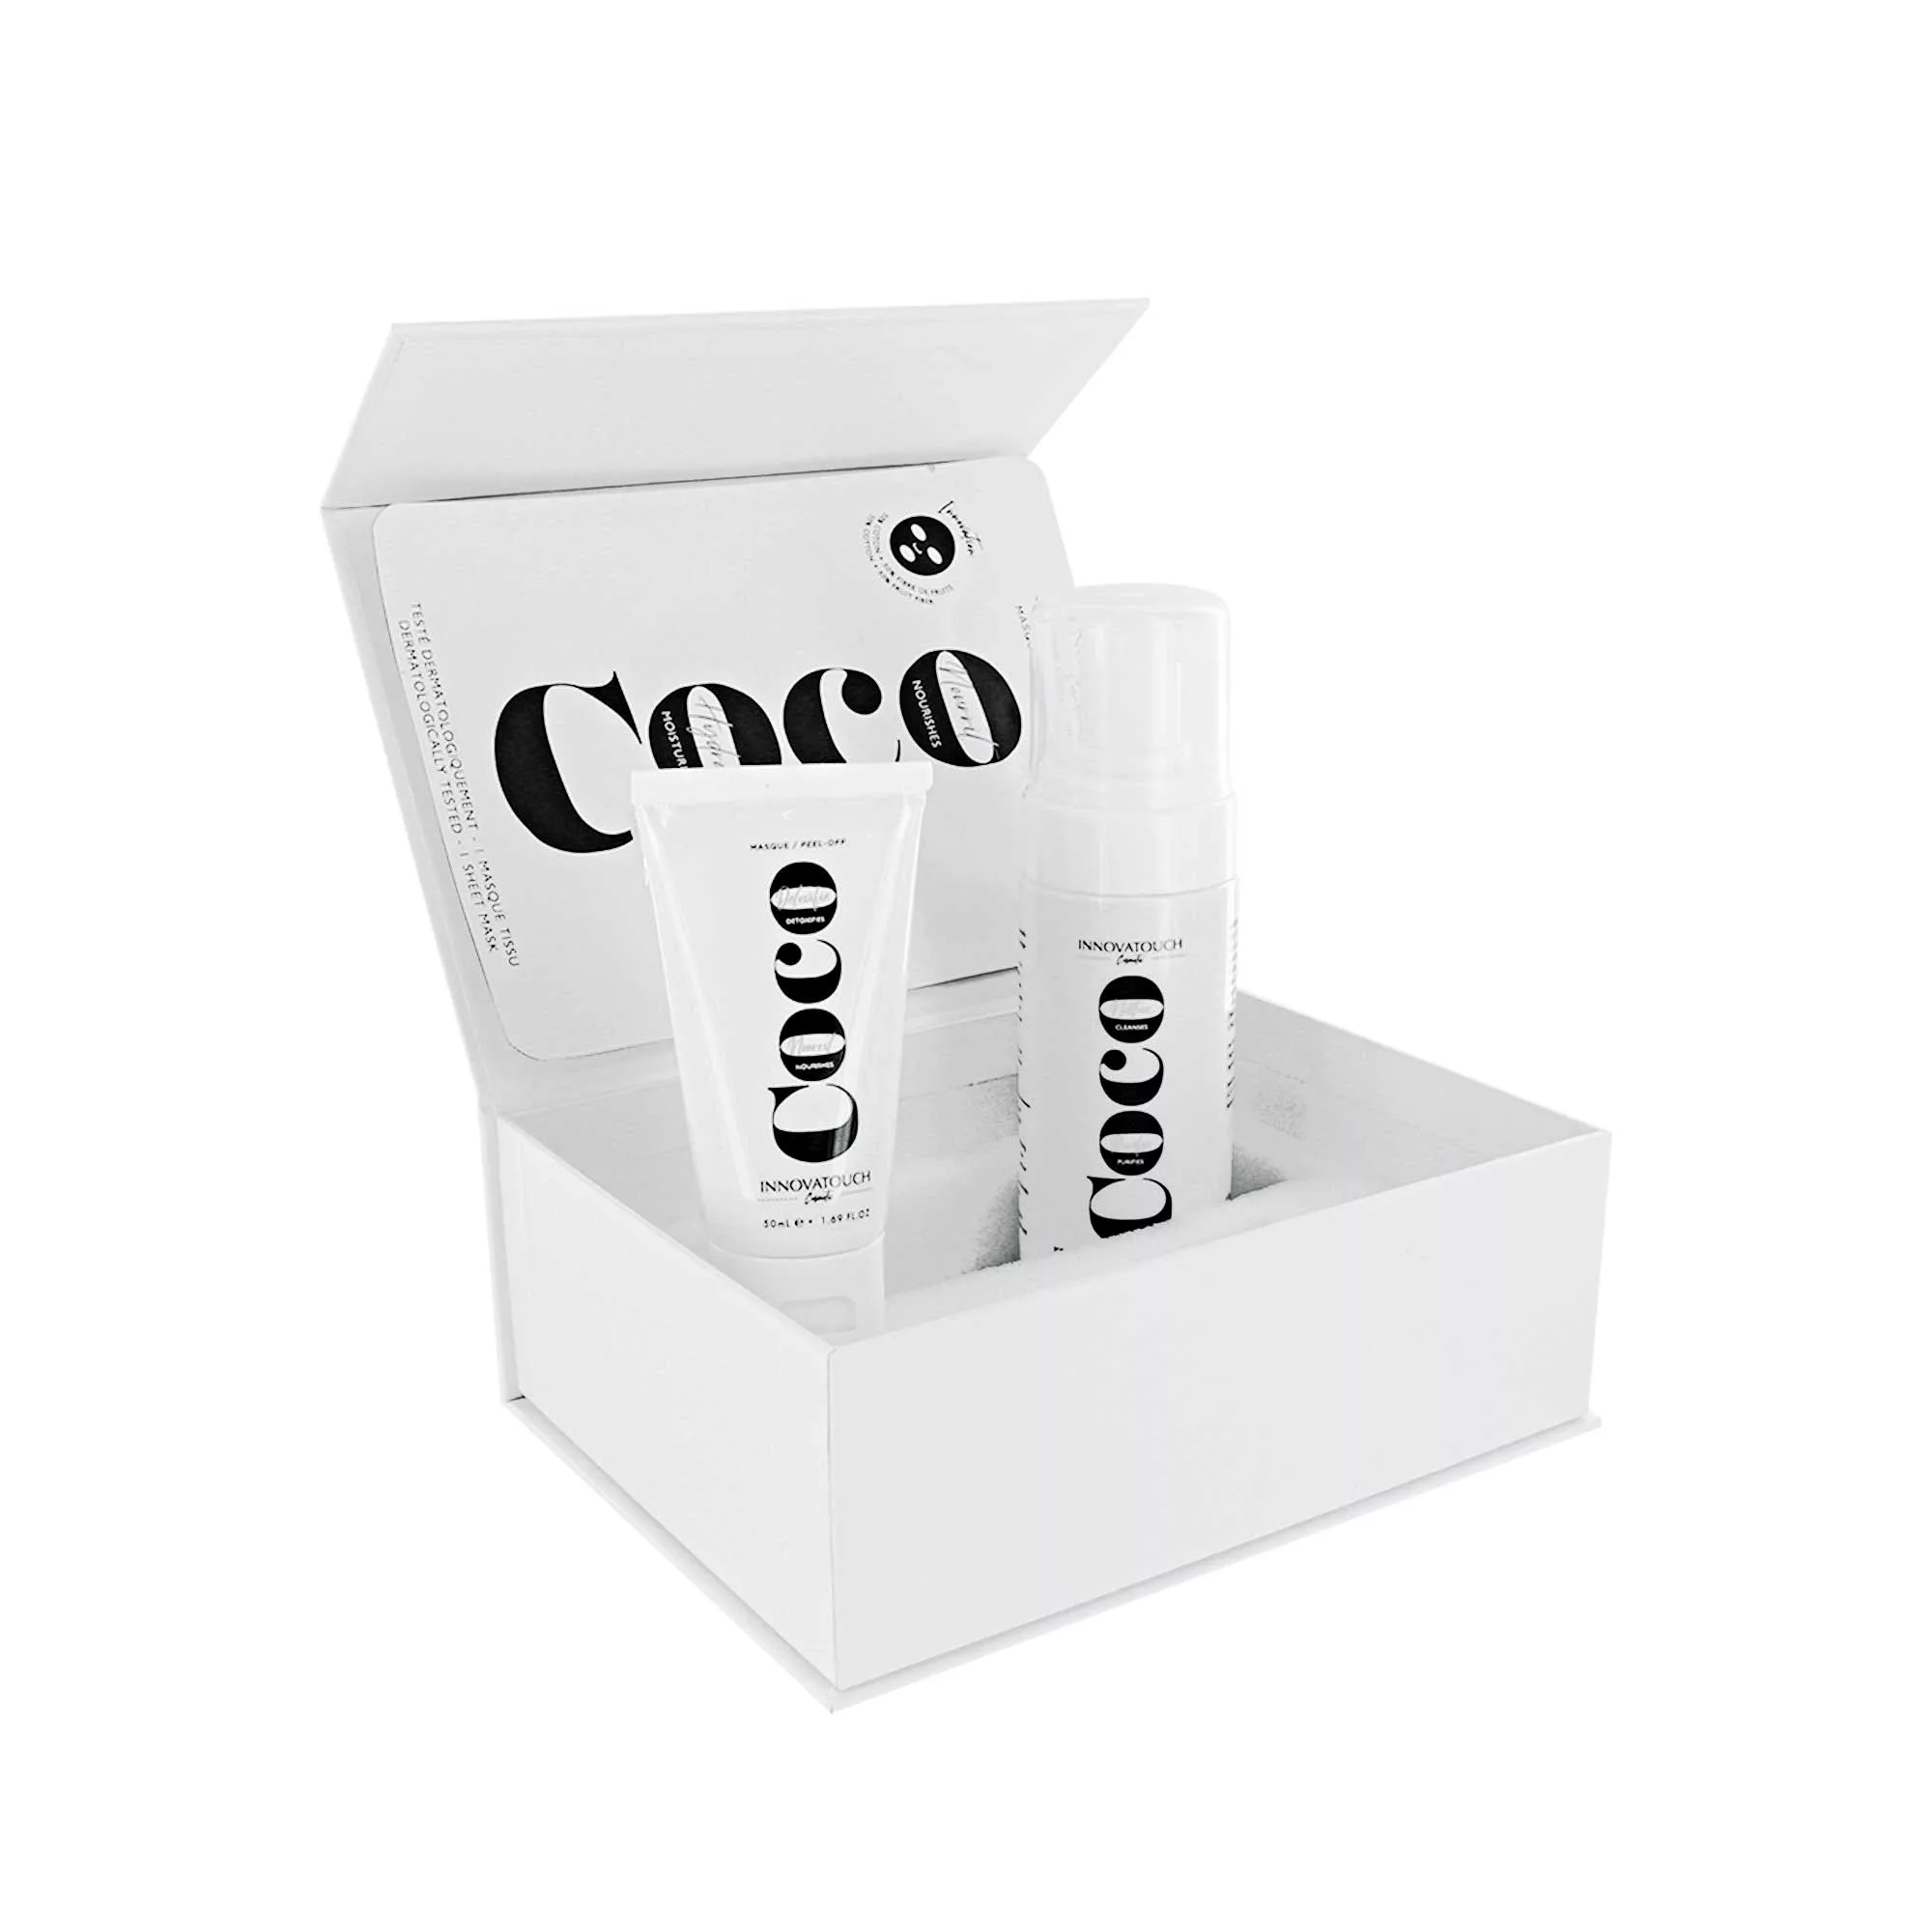 COFFRET-coco-3-cadeaux-innovatouch-cosmetic